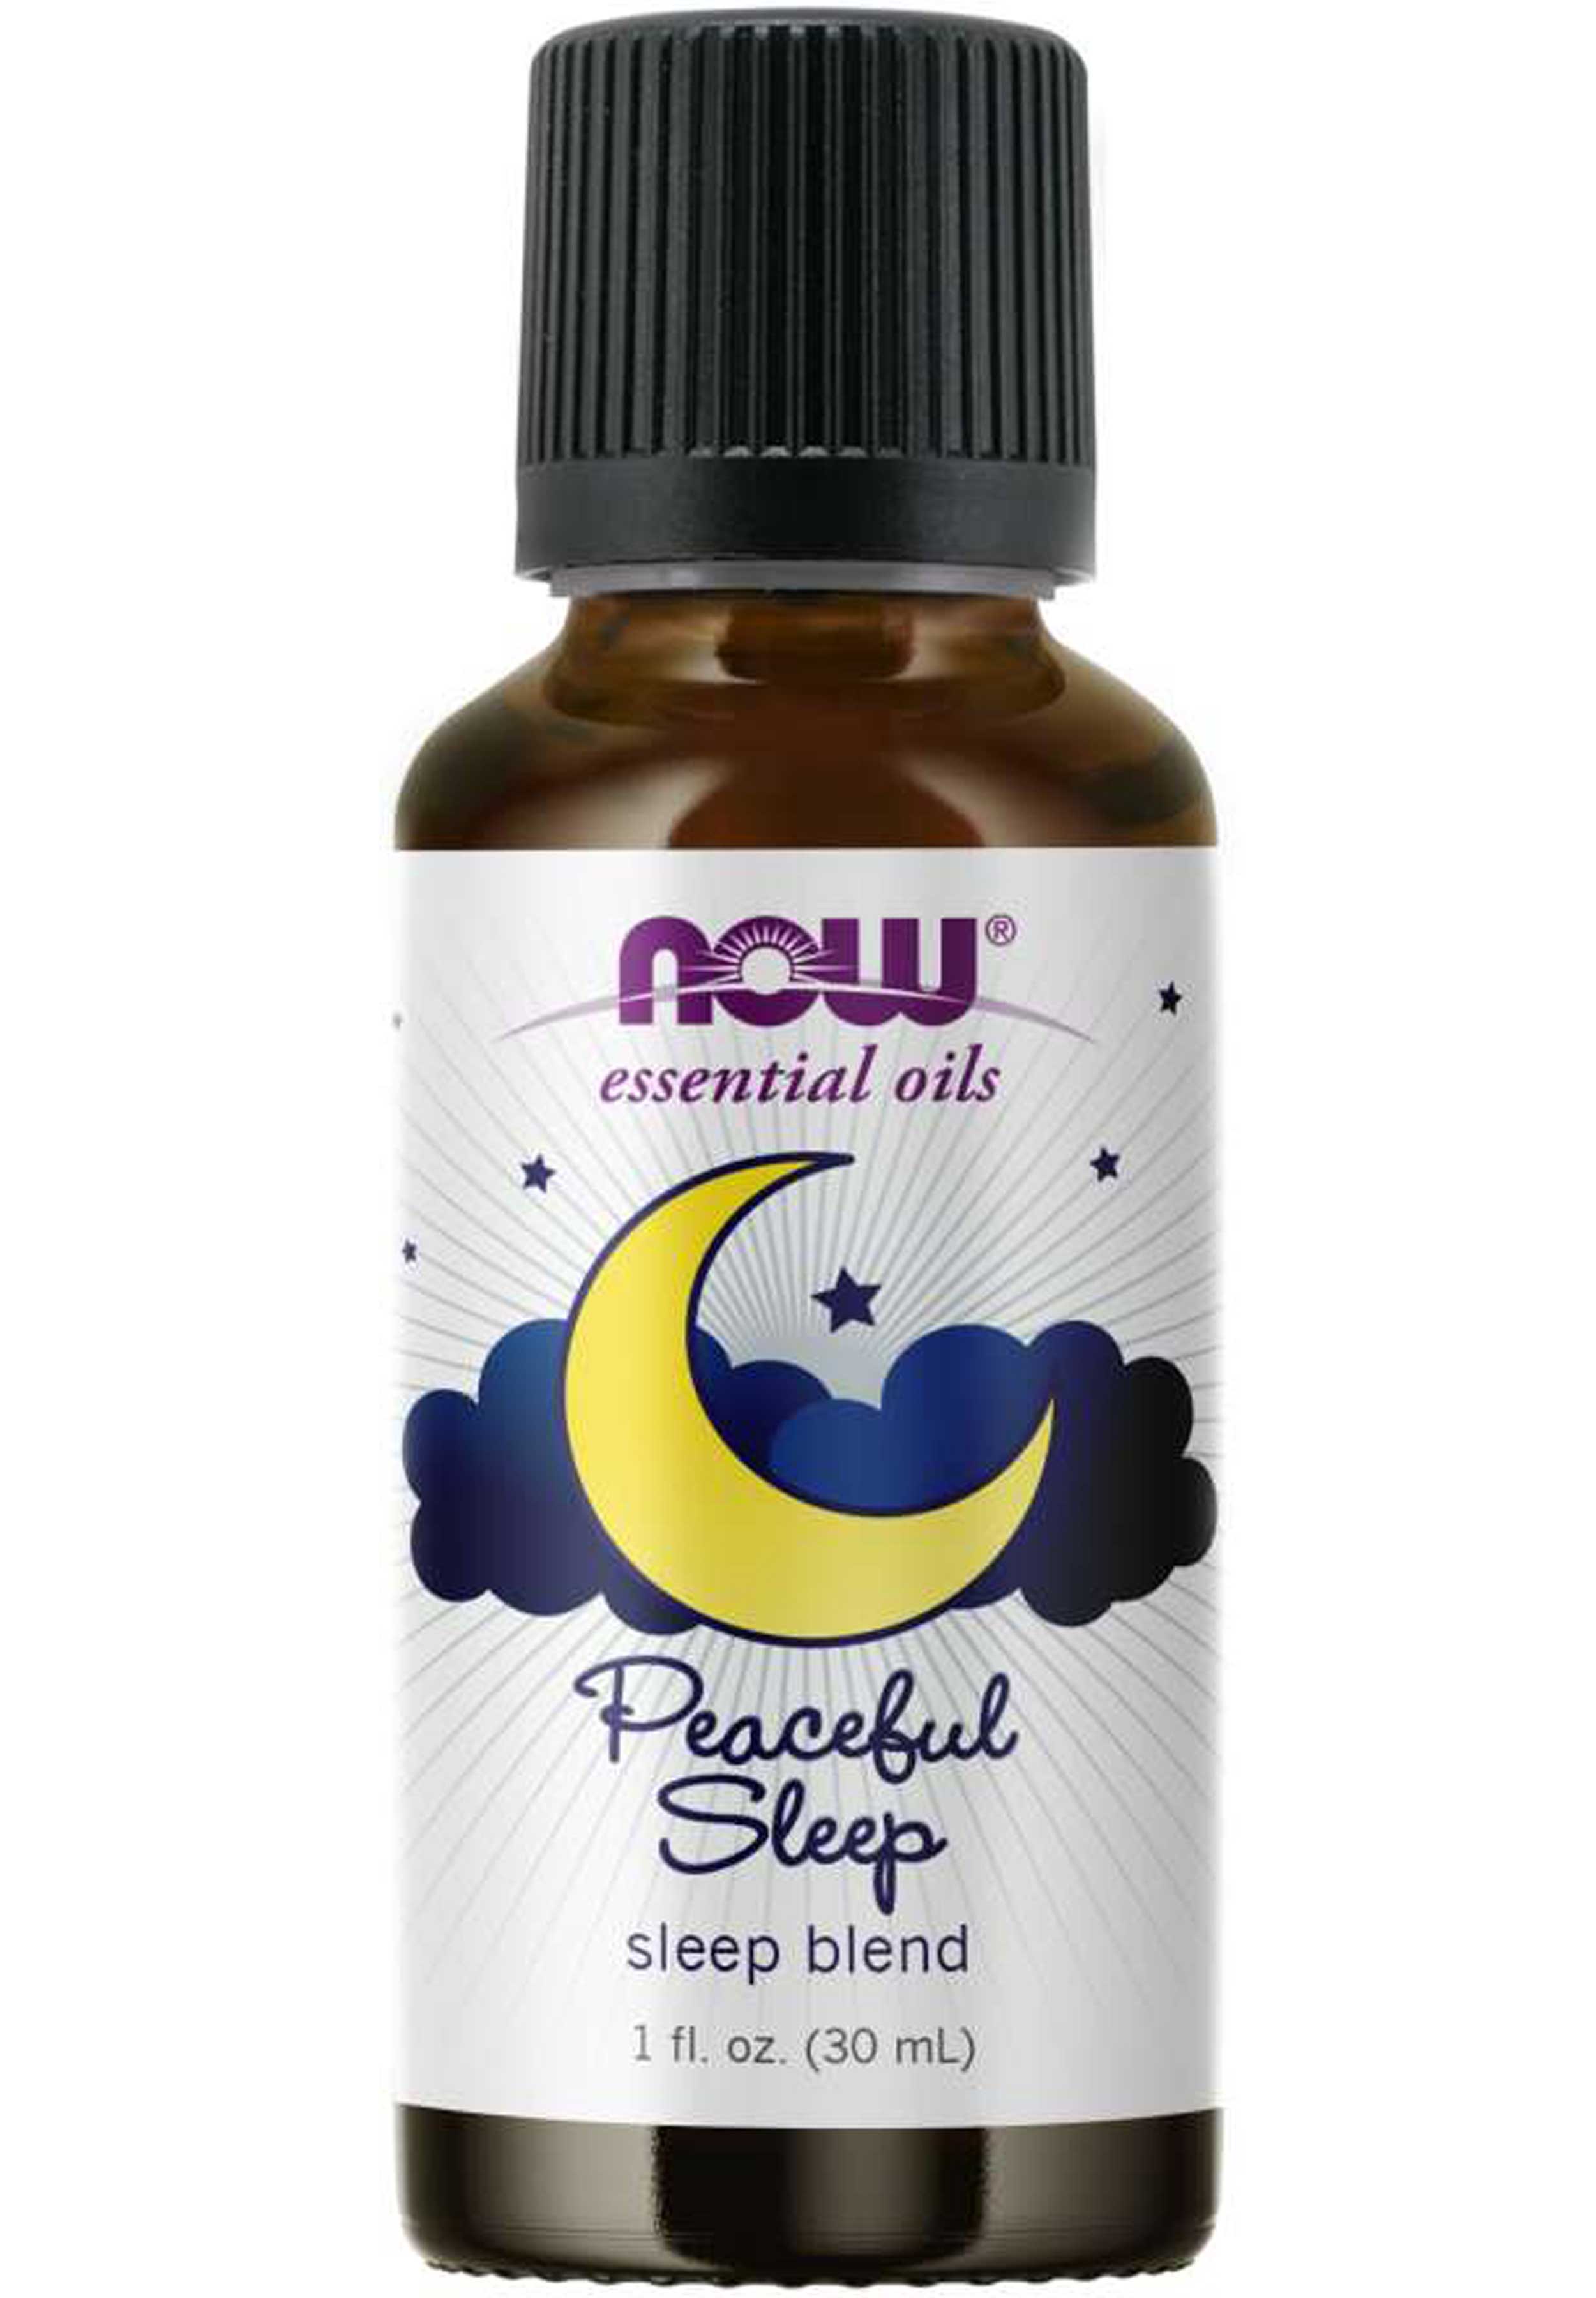 NOW Essential Oils Peaceful Sleep Oil Blend